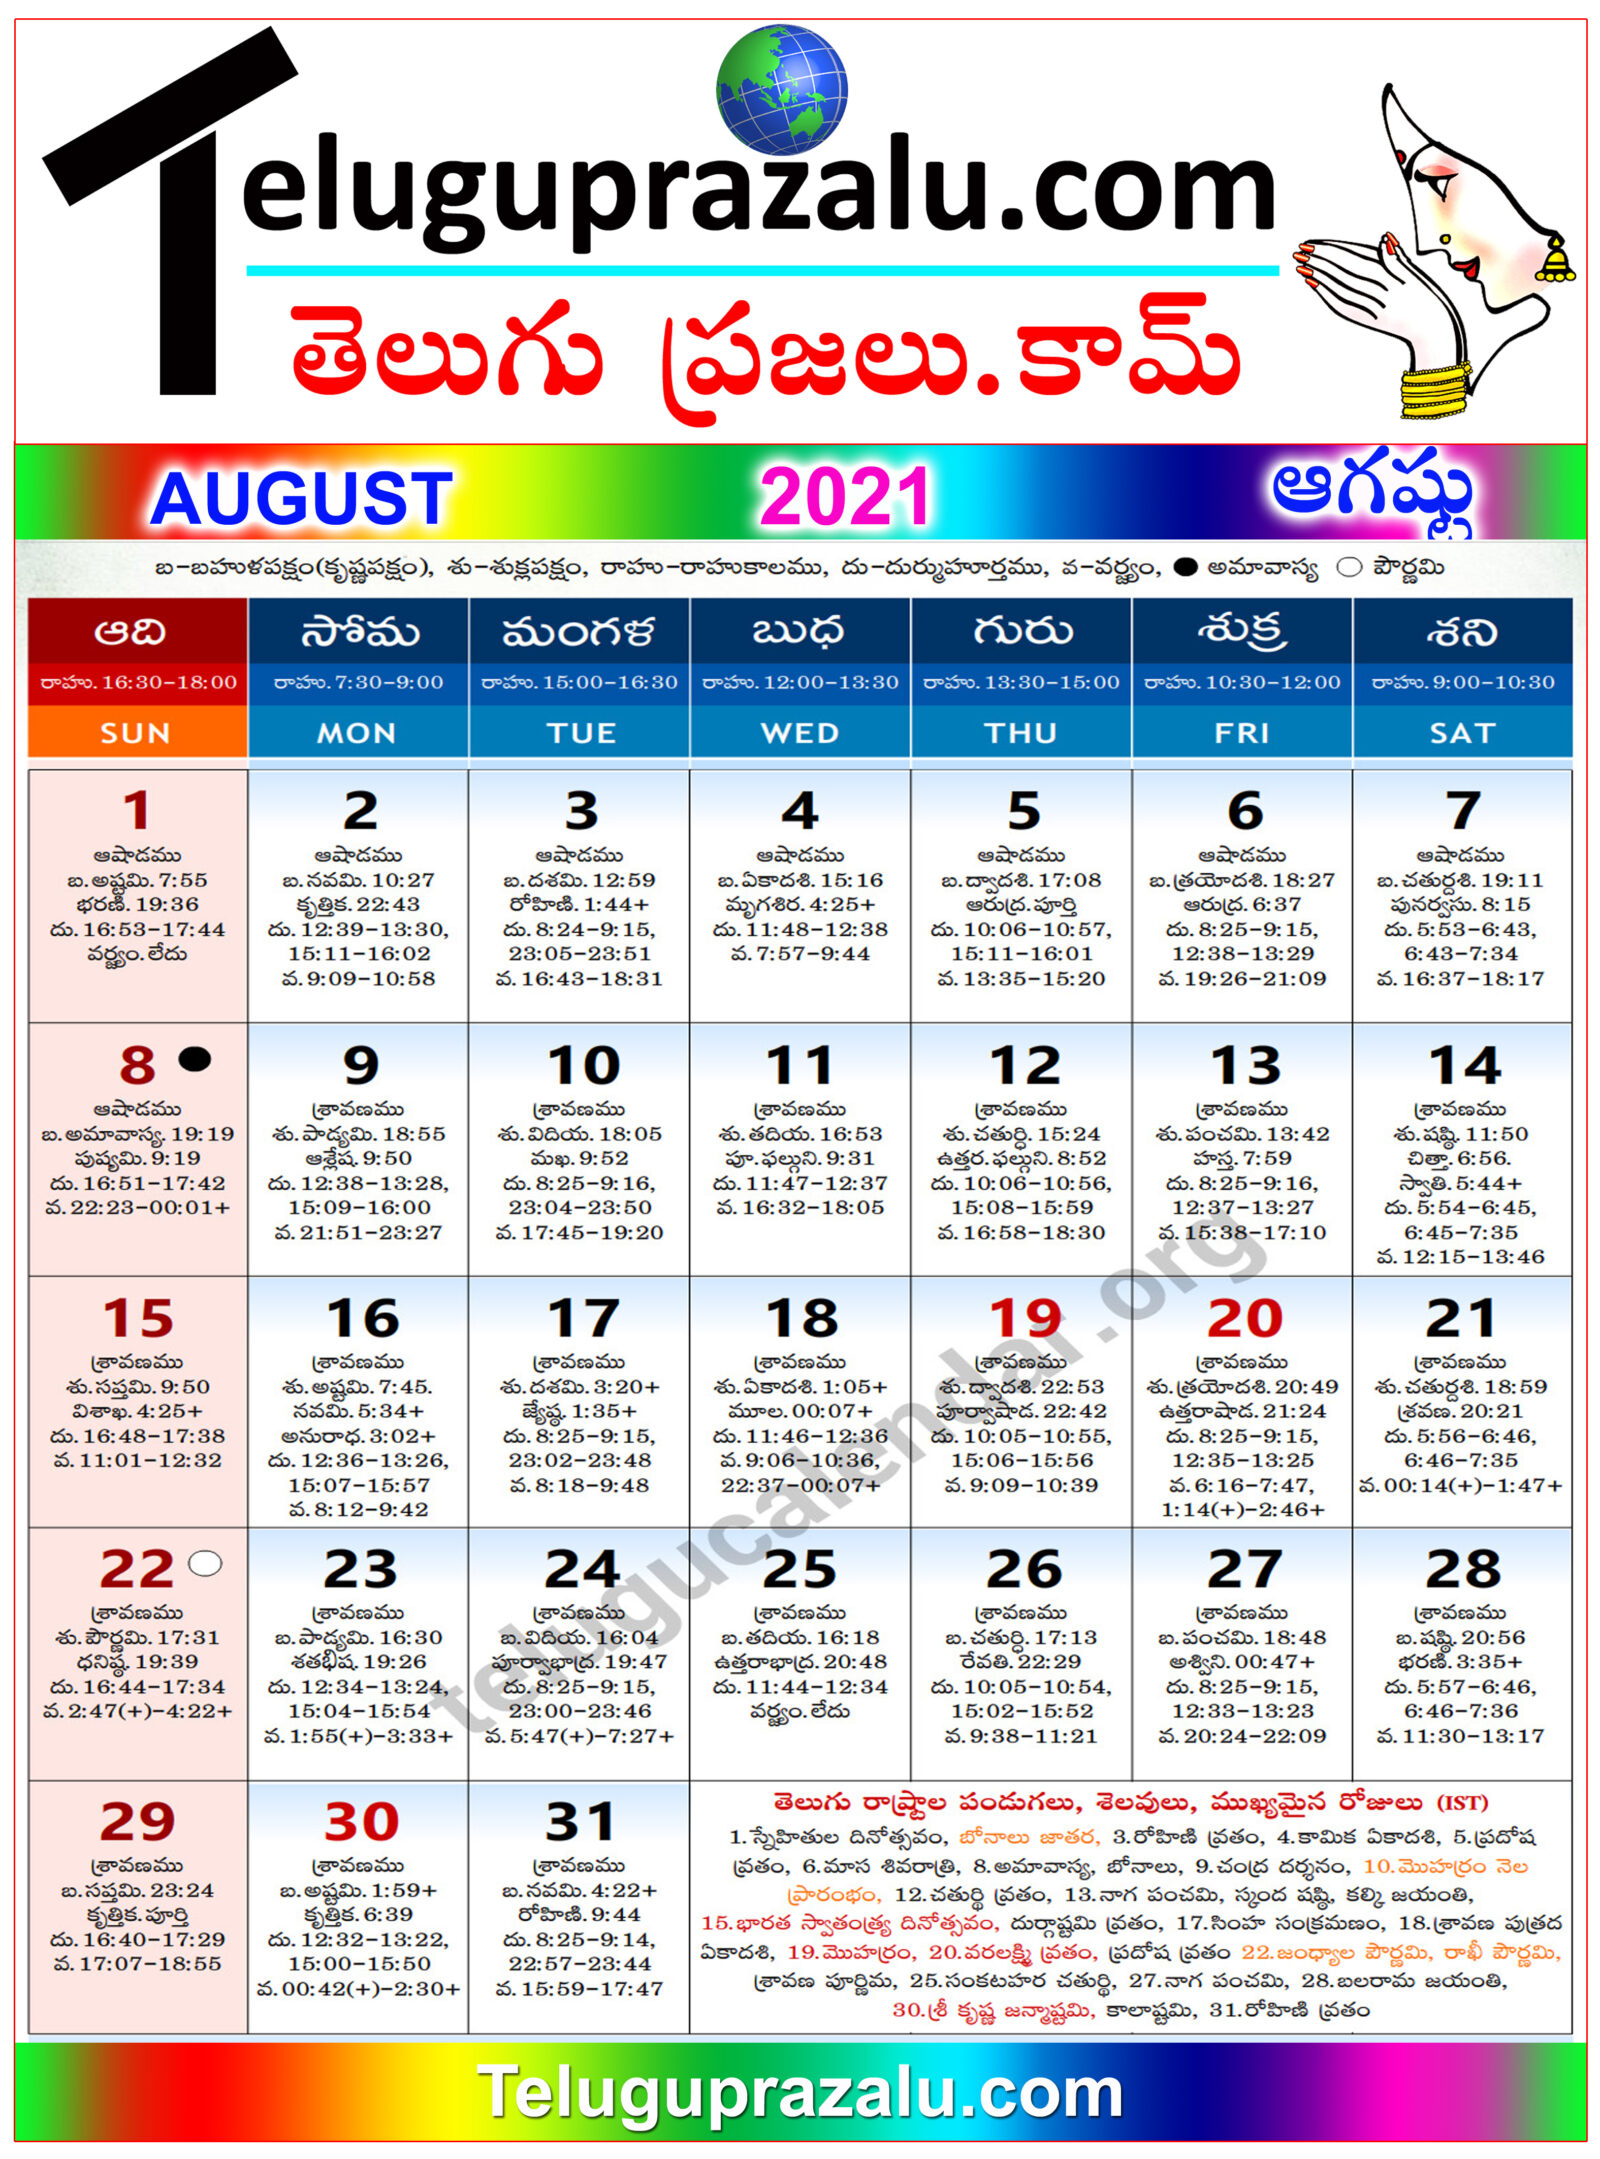 Telugu Calendar 2021 August Telugu News, Movies and More